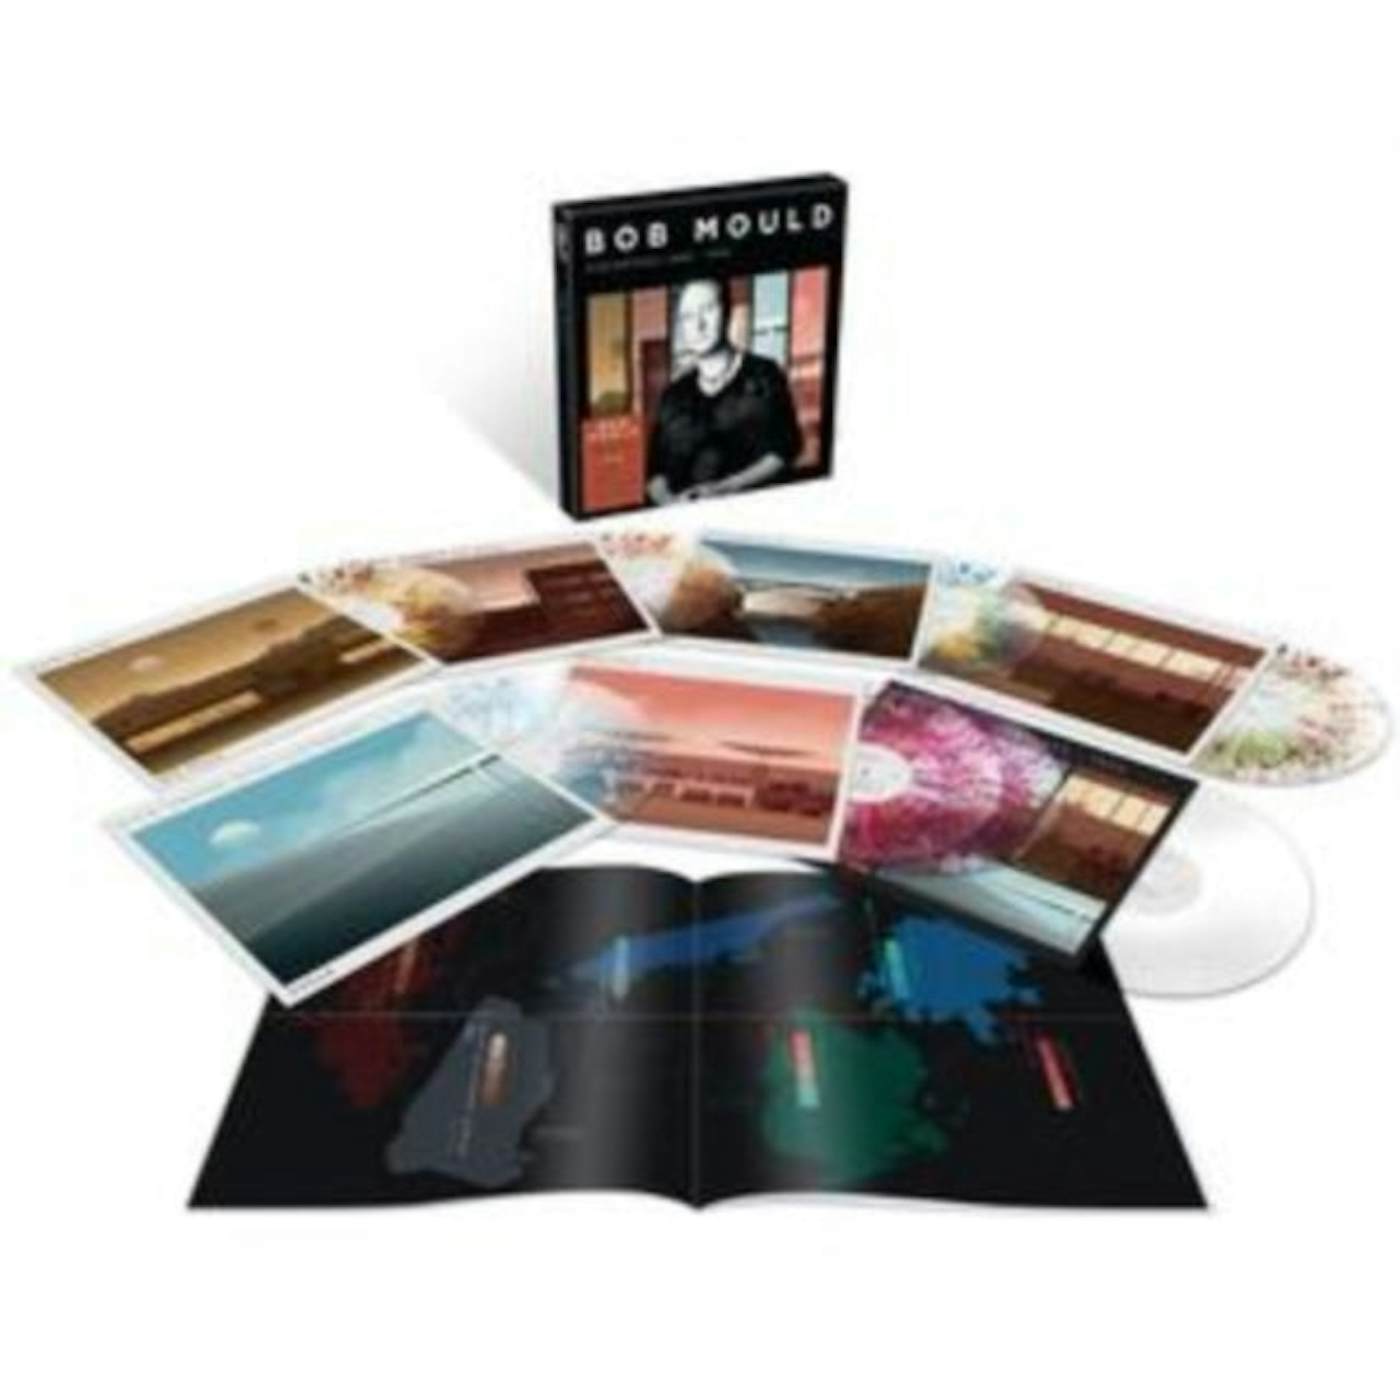  Bob Mould  LP - Distortion 1989-2019 (Vinyl)